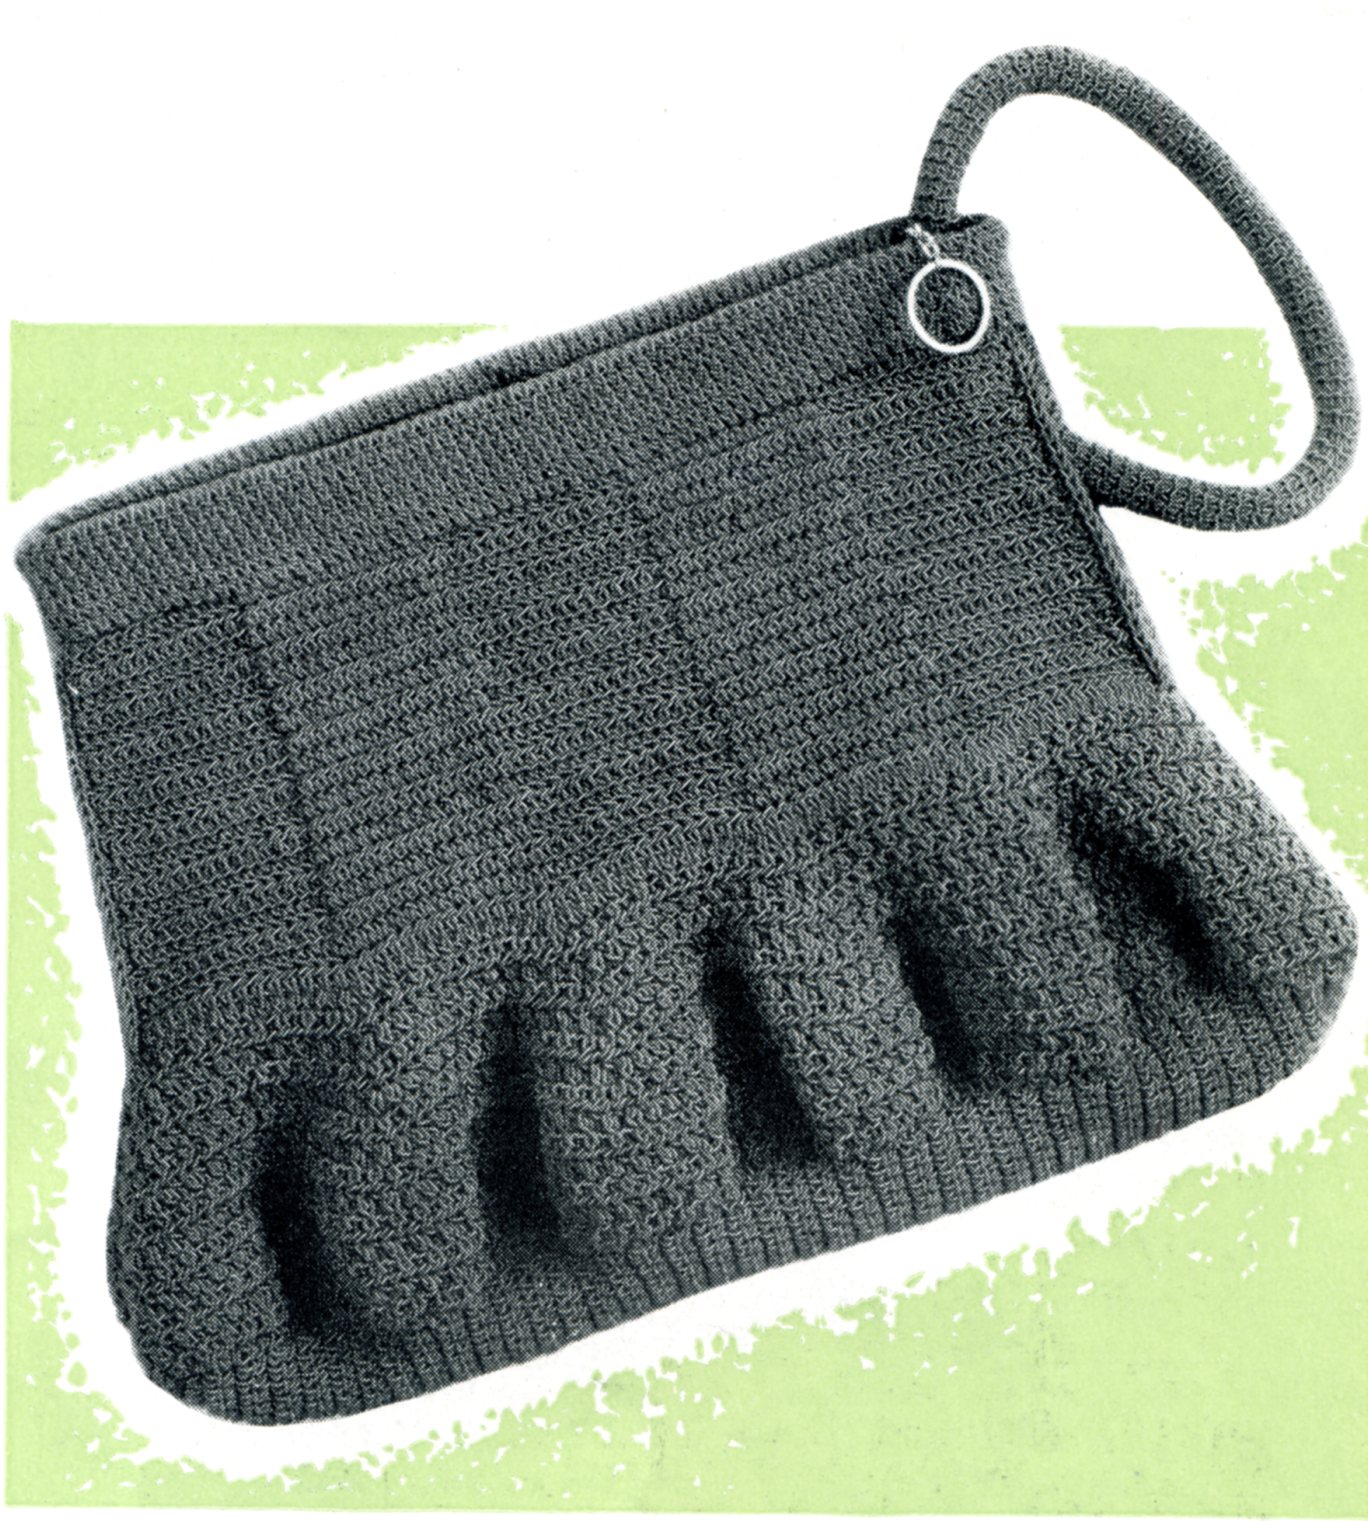 NexStitchв„ў : Stylish Crochet Handbags, Purses, and Clutches